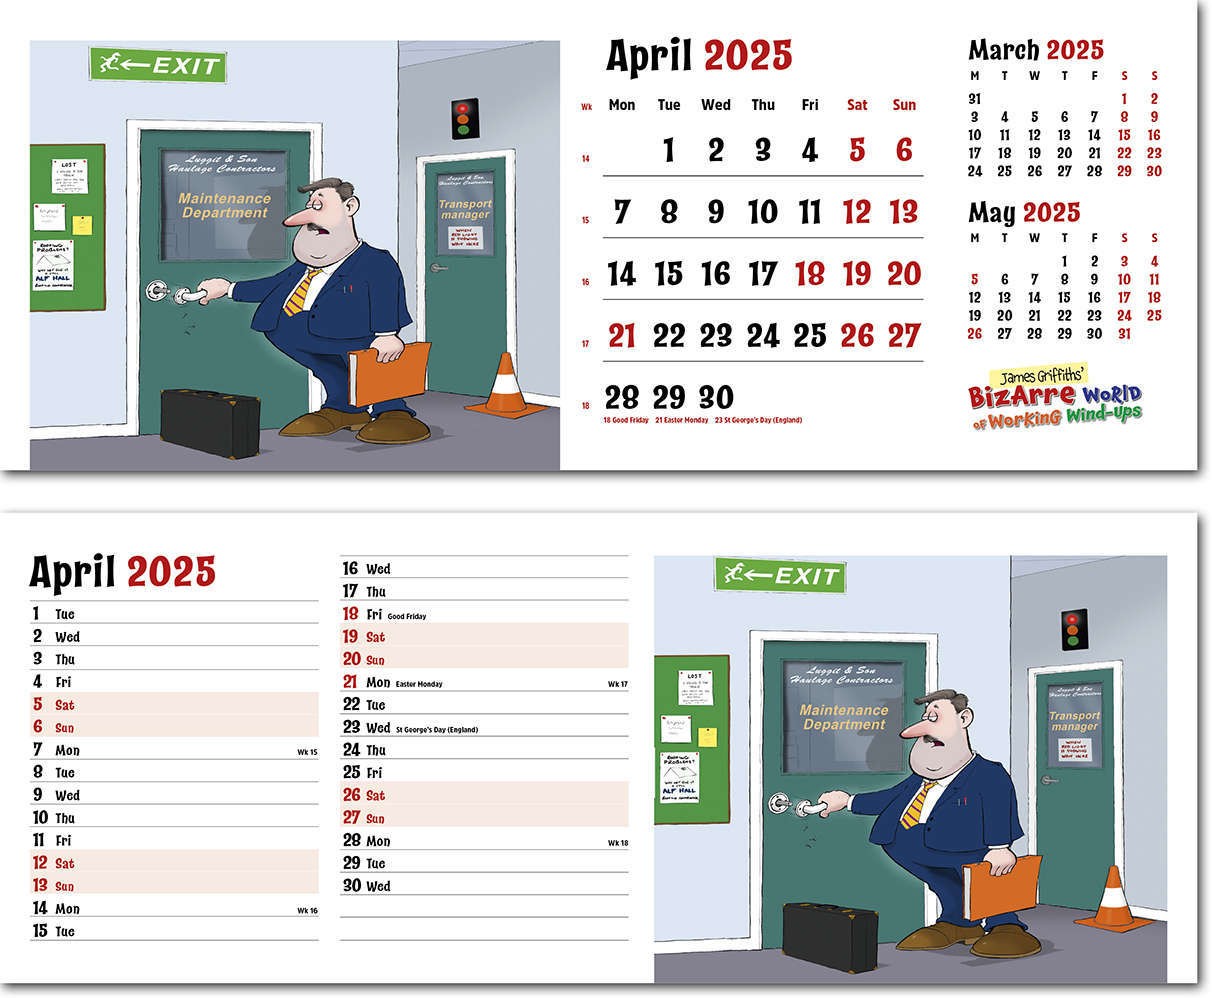 Bizarre World of Working Wind Ups Task Station Desk Calendar